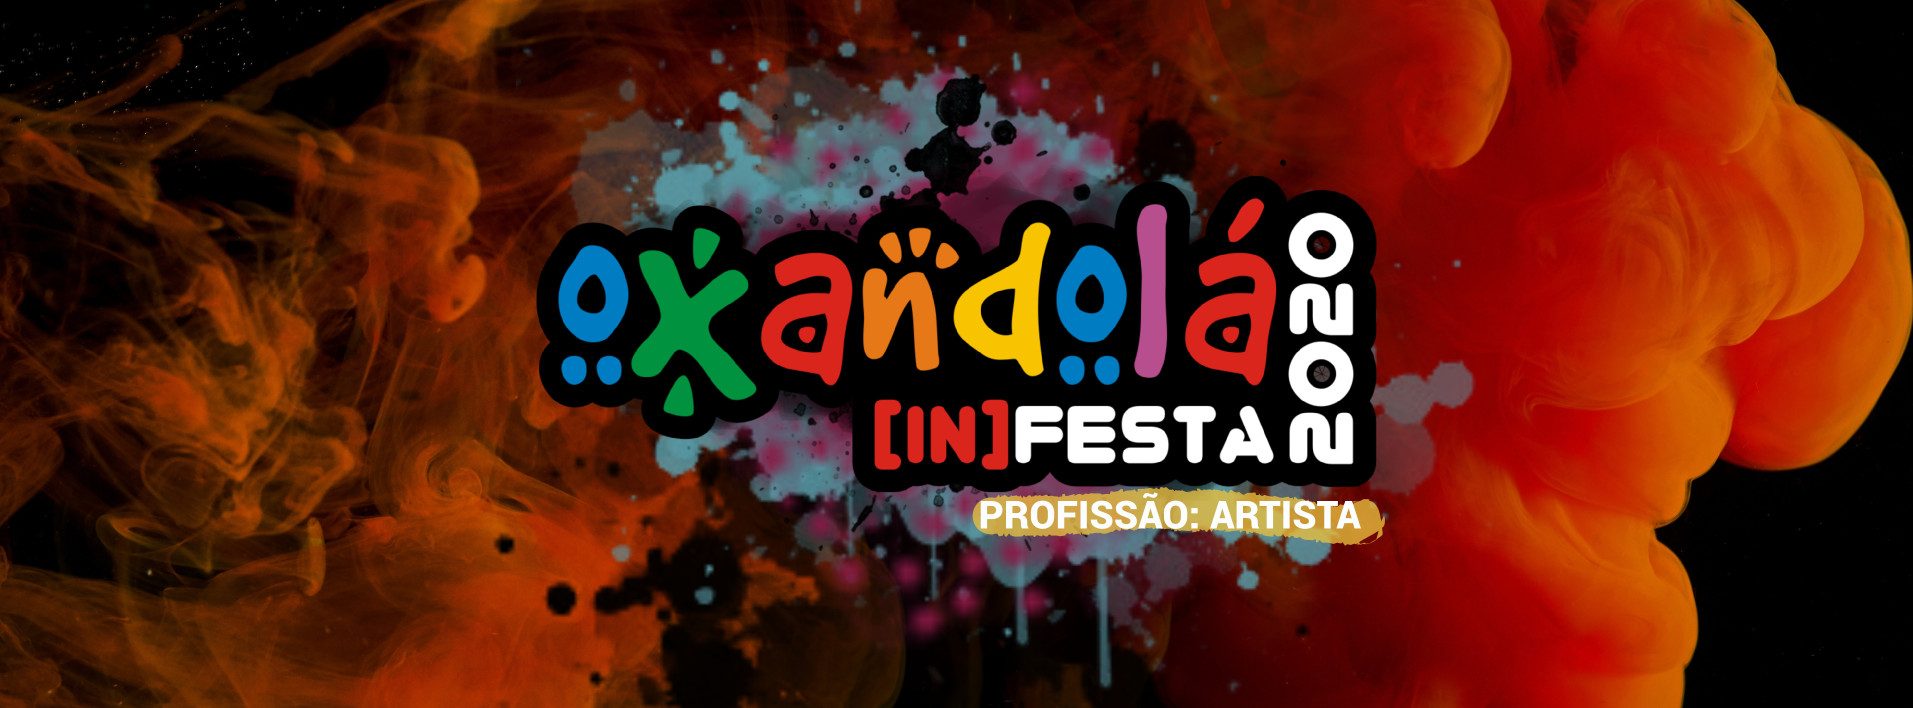 Oxandolá [In] Festa 2020 abre inscrições para artistas e grupos